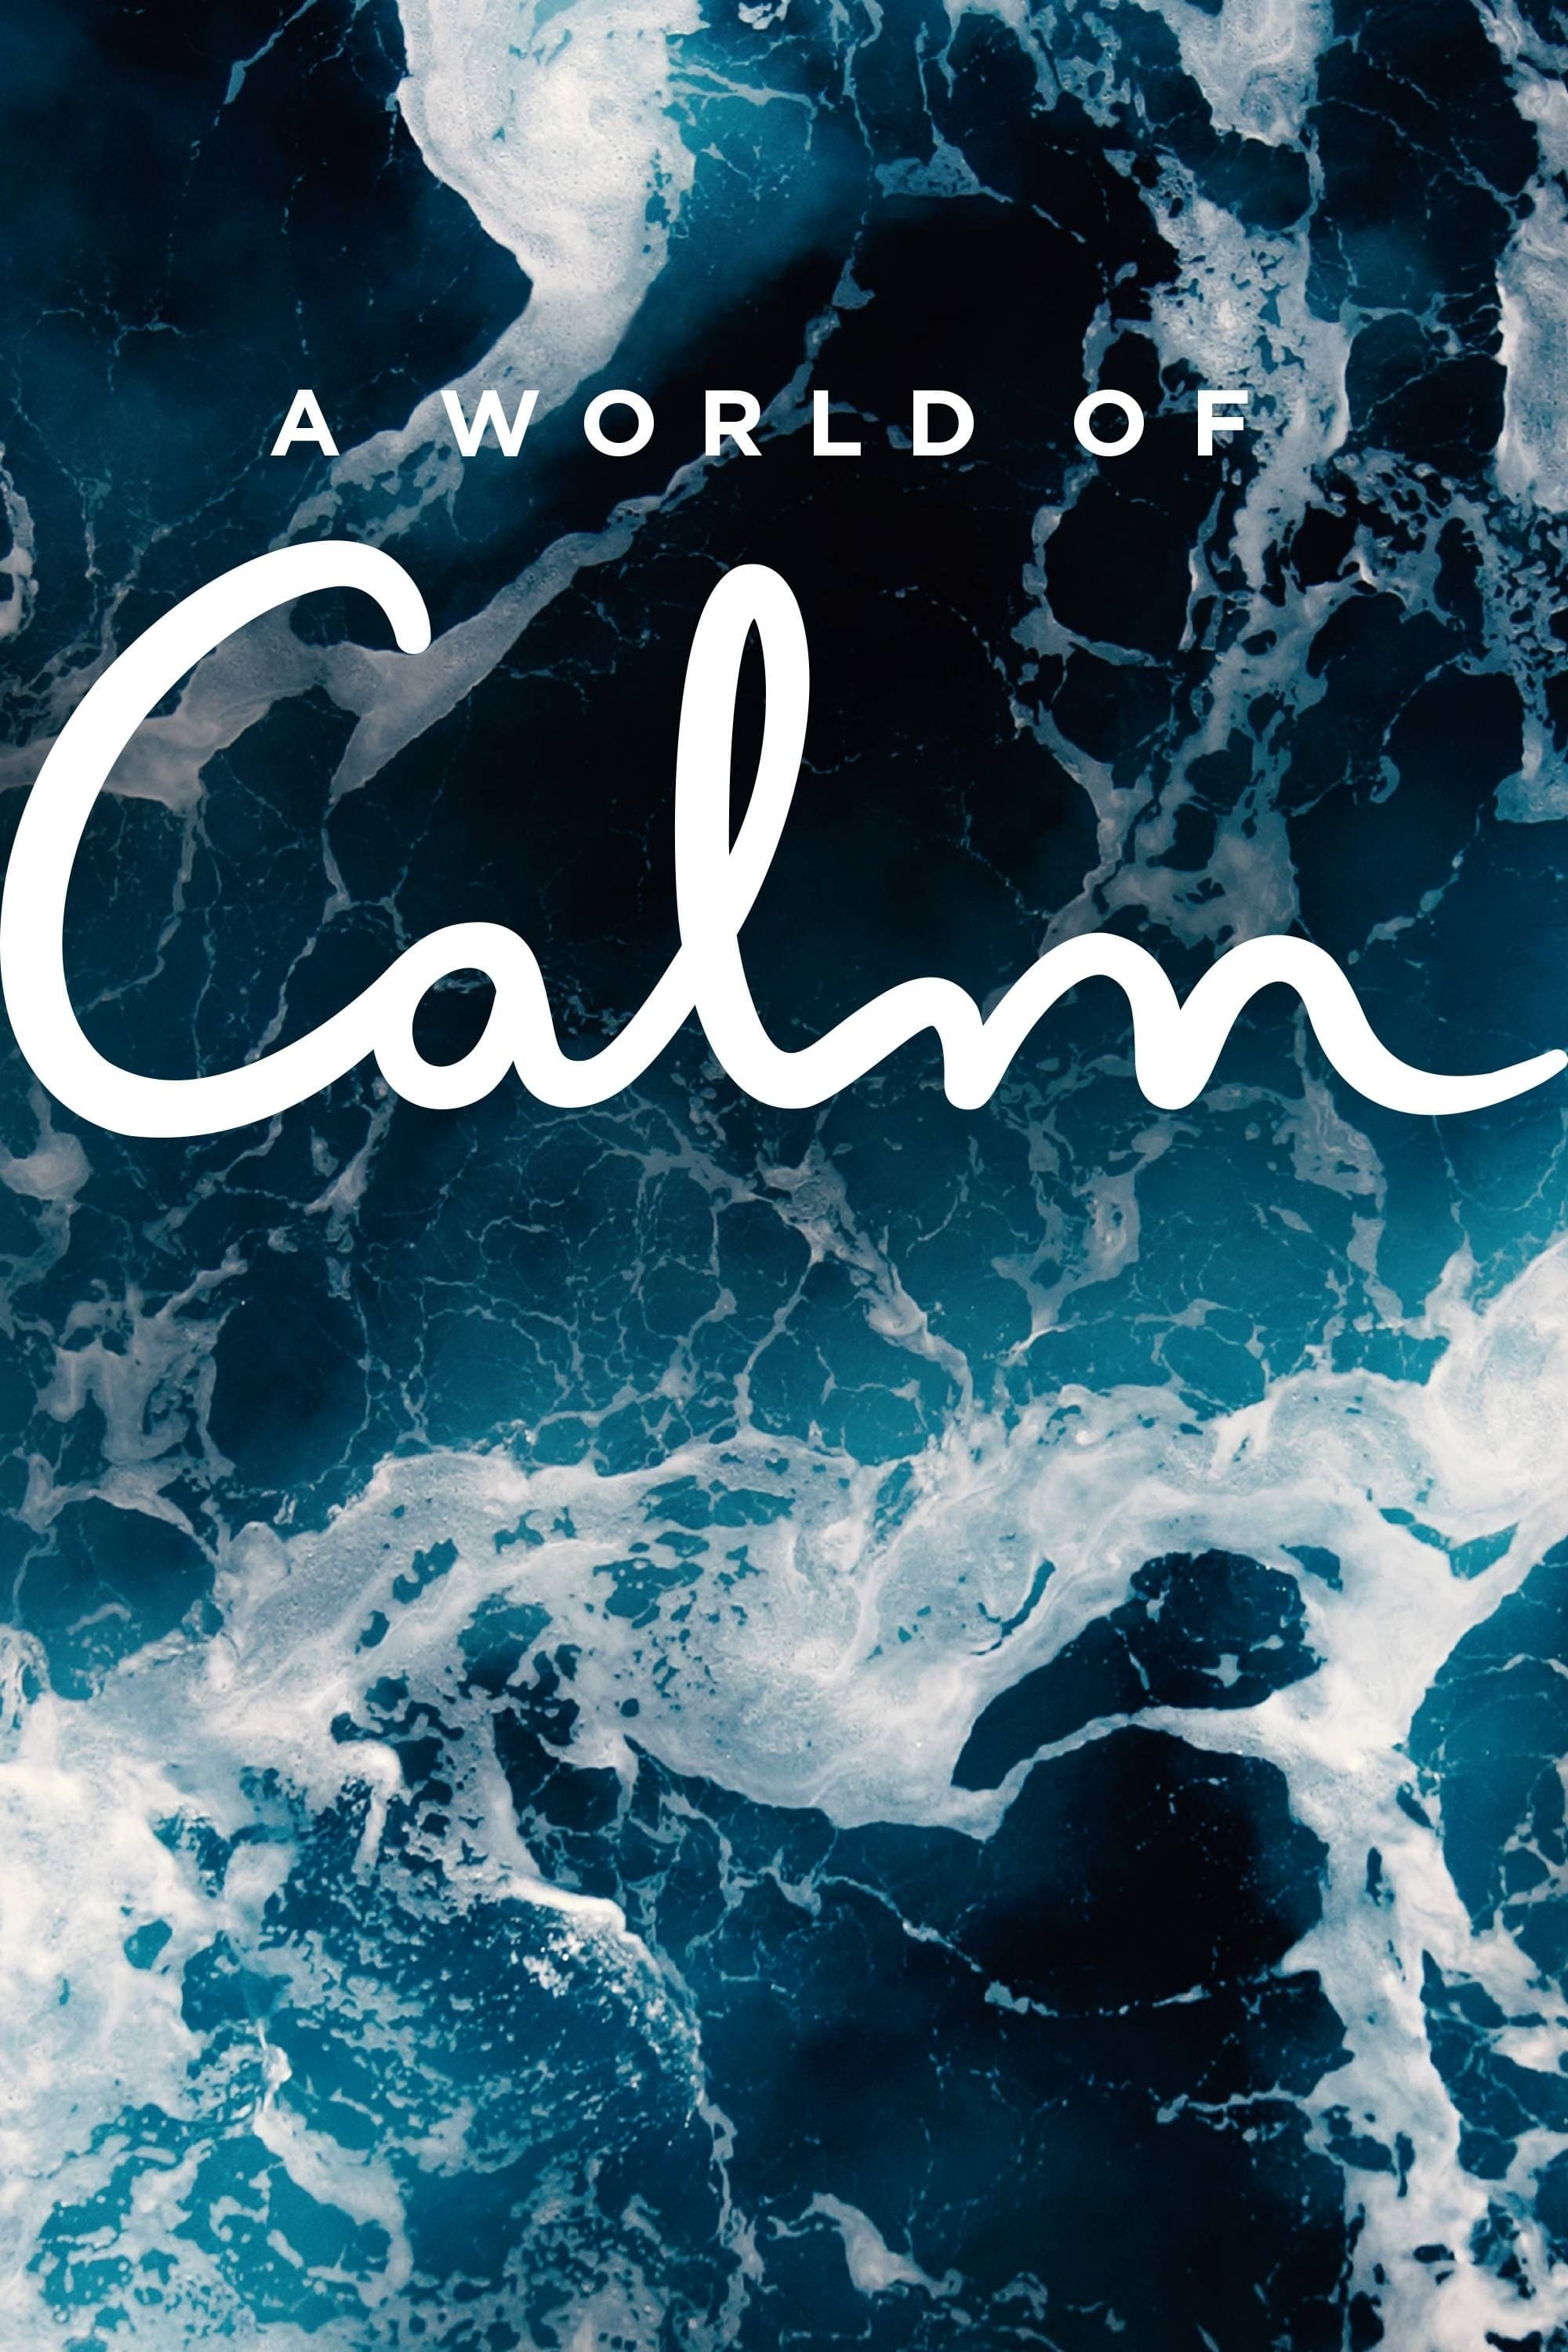 A World of Calm (2020)